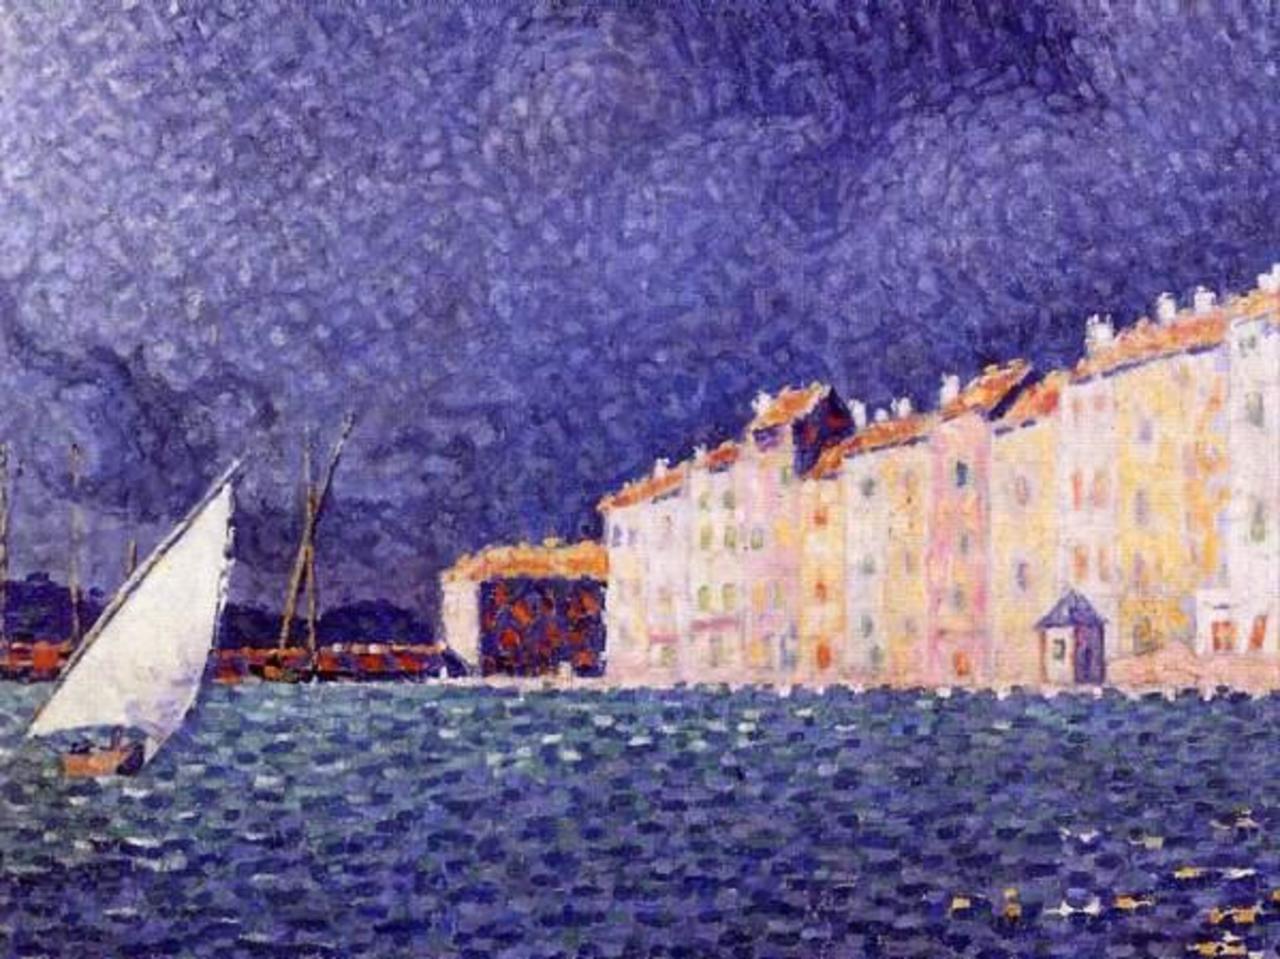 "Saint-Tropez, L'Orage"1895, Paul Signac #art Iloveart http://t.co/9rTOJ8fAfD